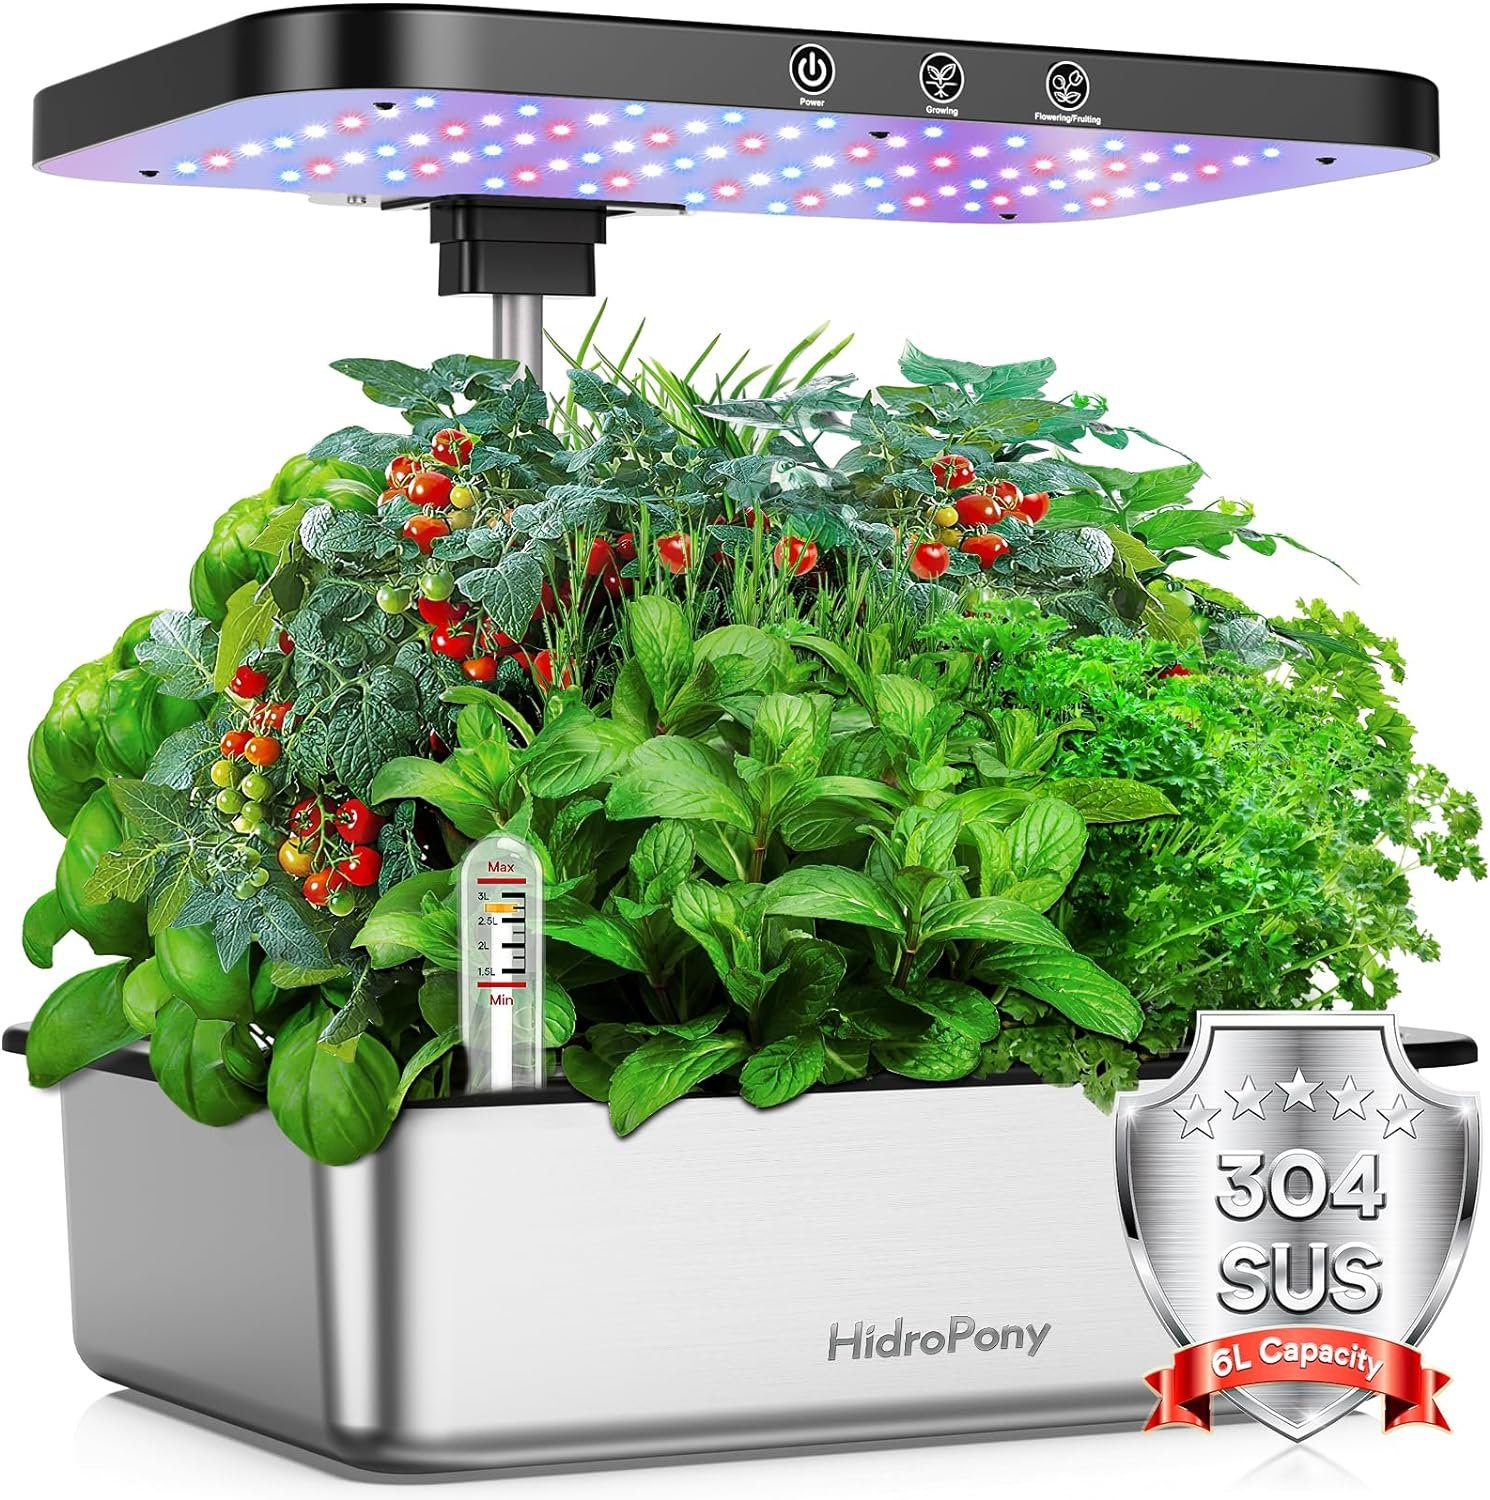 hydroponics growing system 15 pods indoor herb garden with grow light 304 stainless steel indoor garden kit auto timer g